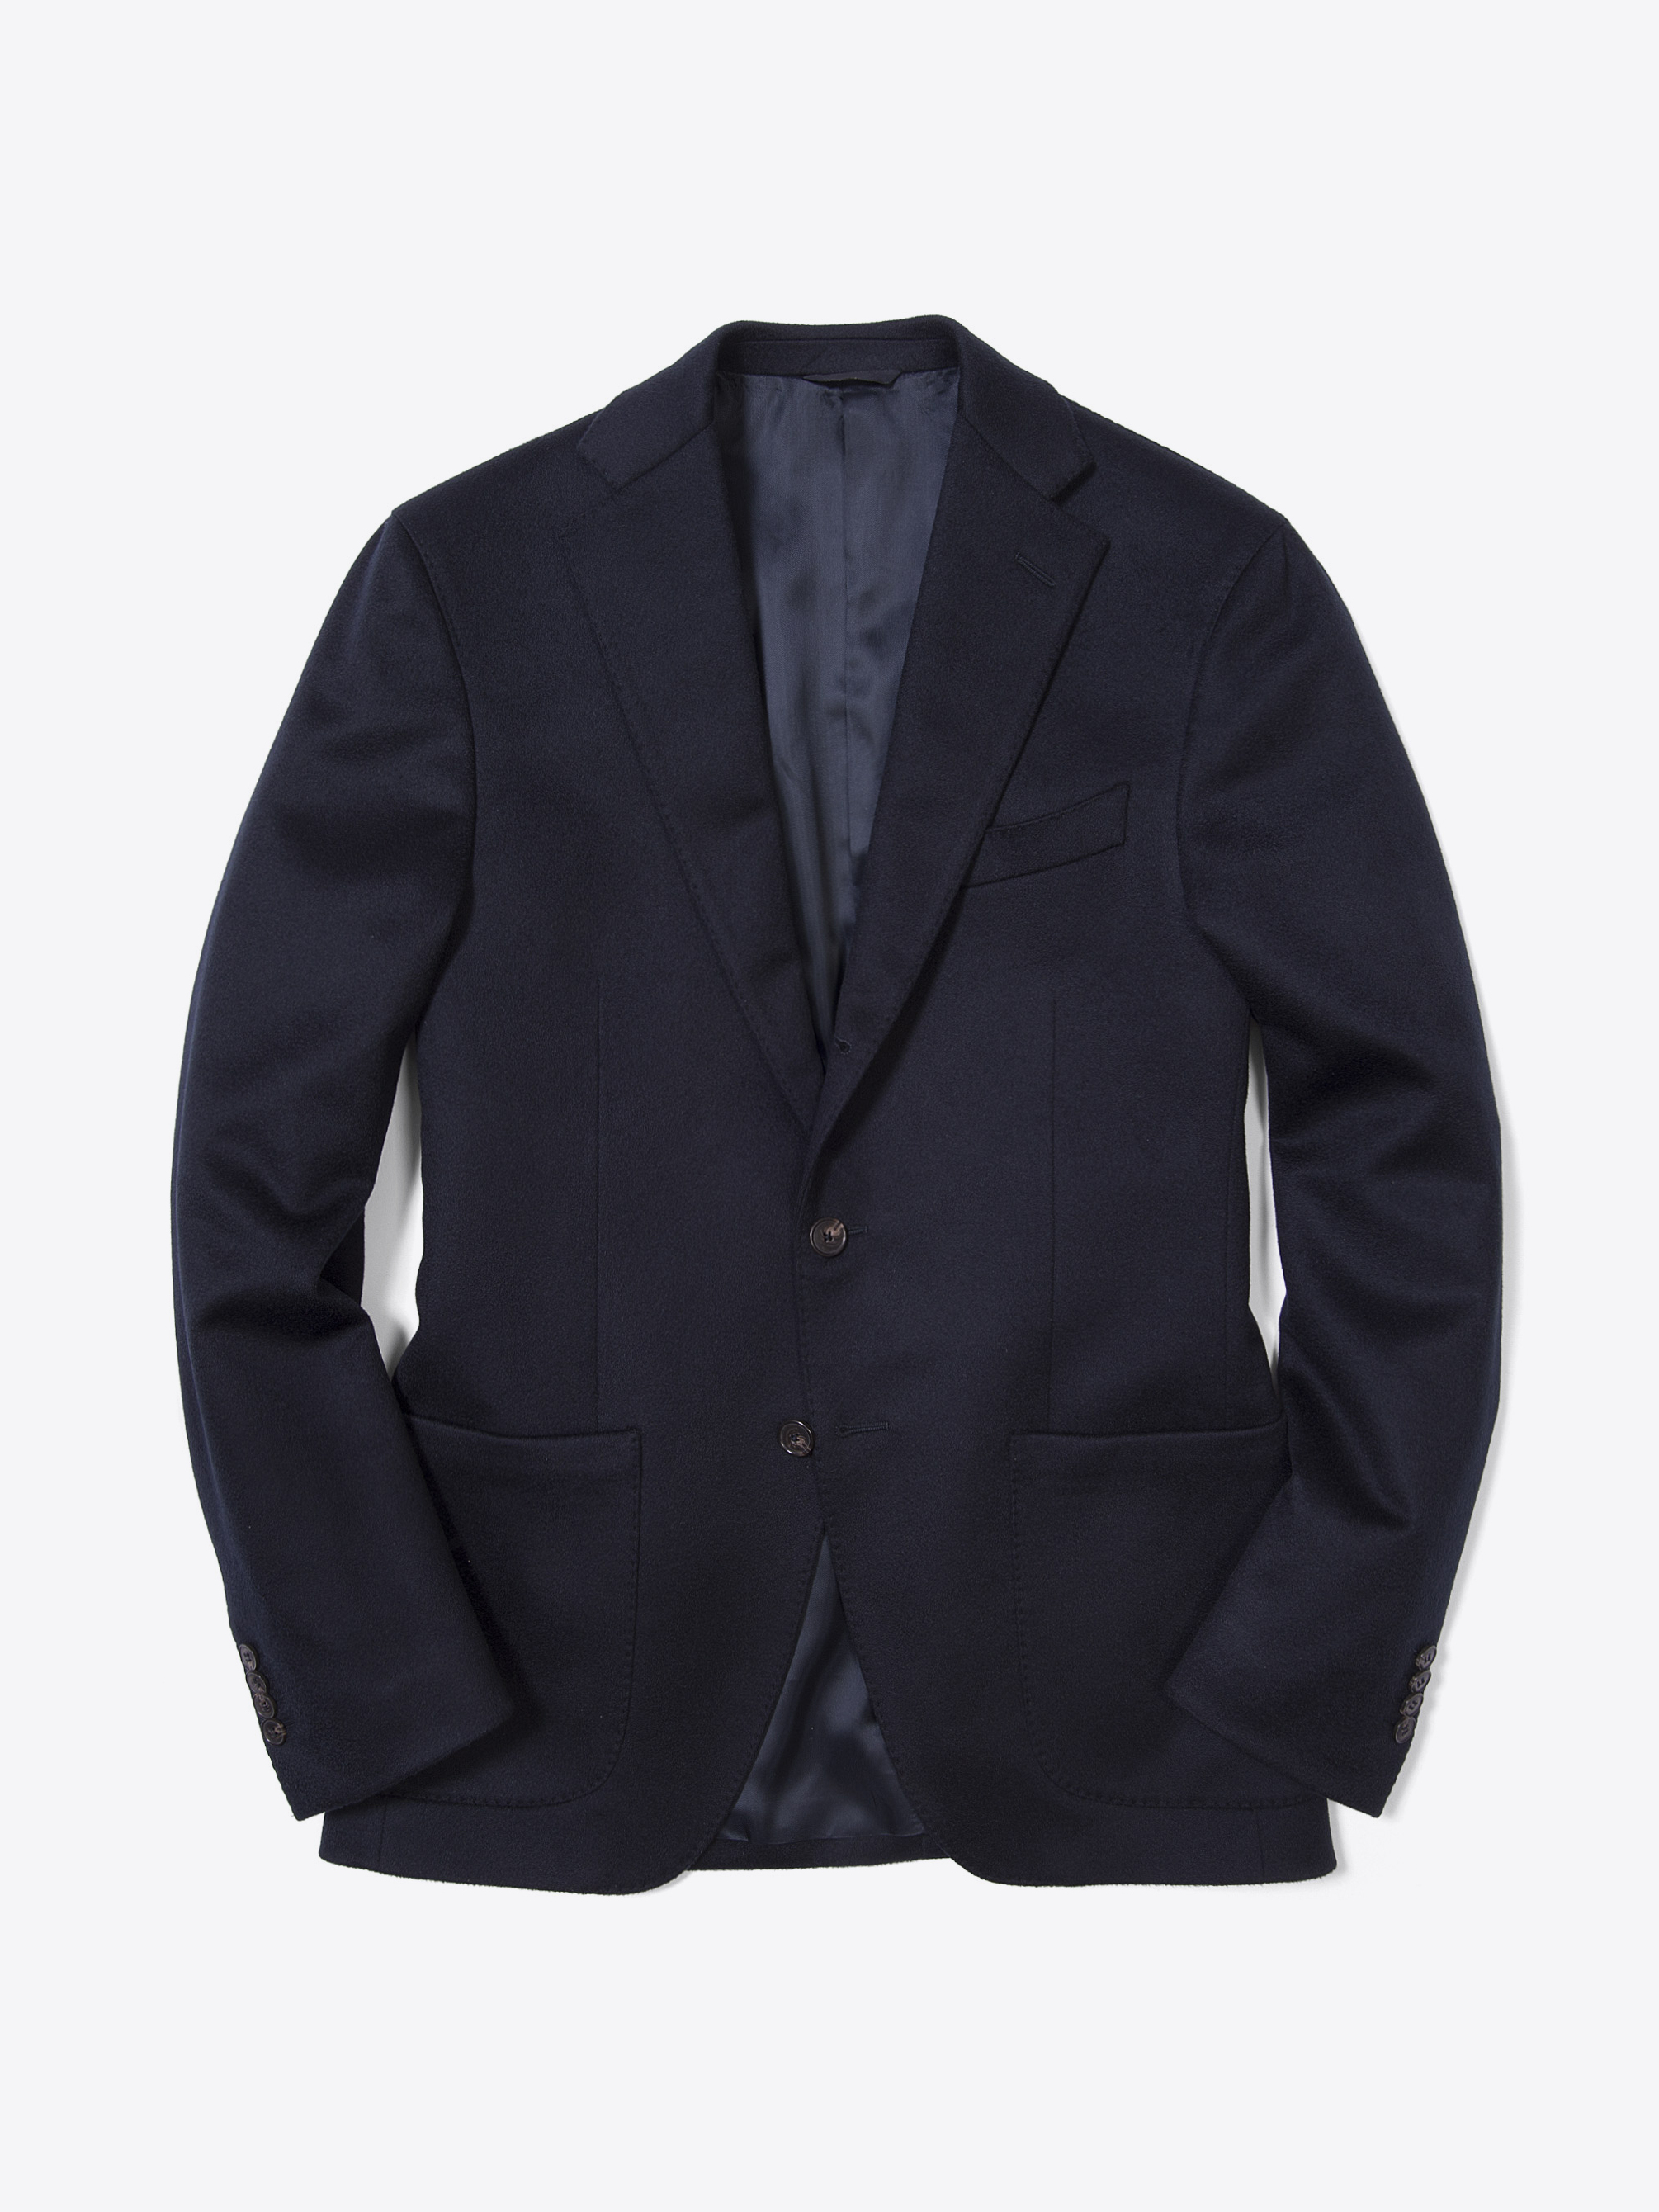 Navy Cashmere Jacket by Proper Cloth